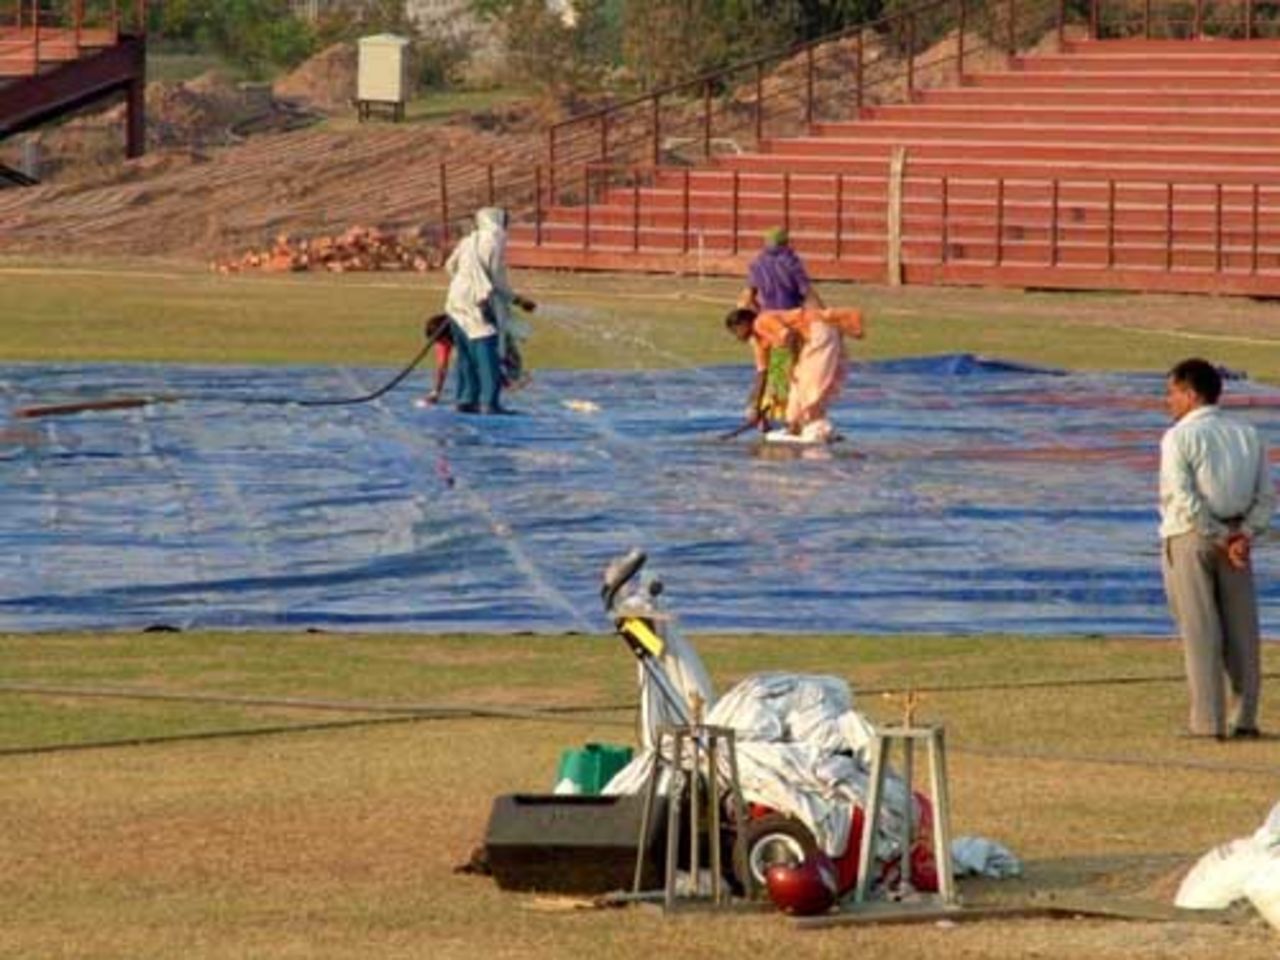 The groundstaff prepare the Tau Devi Lal Cricket Stadium, Chandigarh, November 24, 2007 